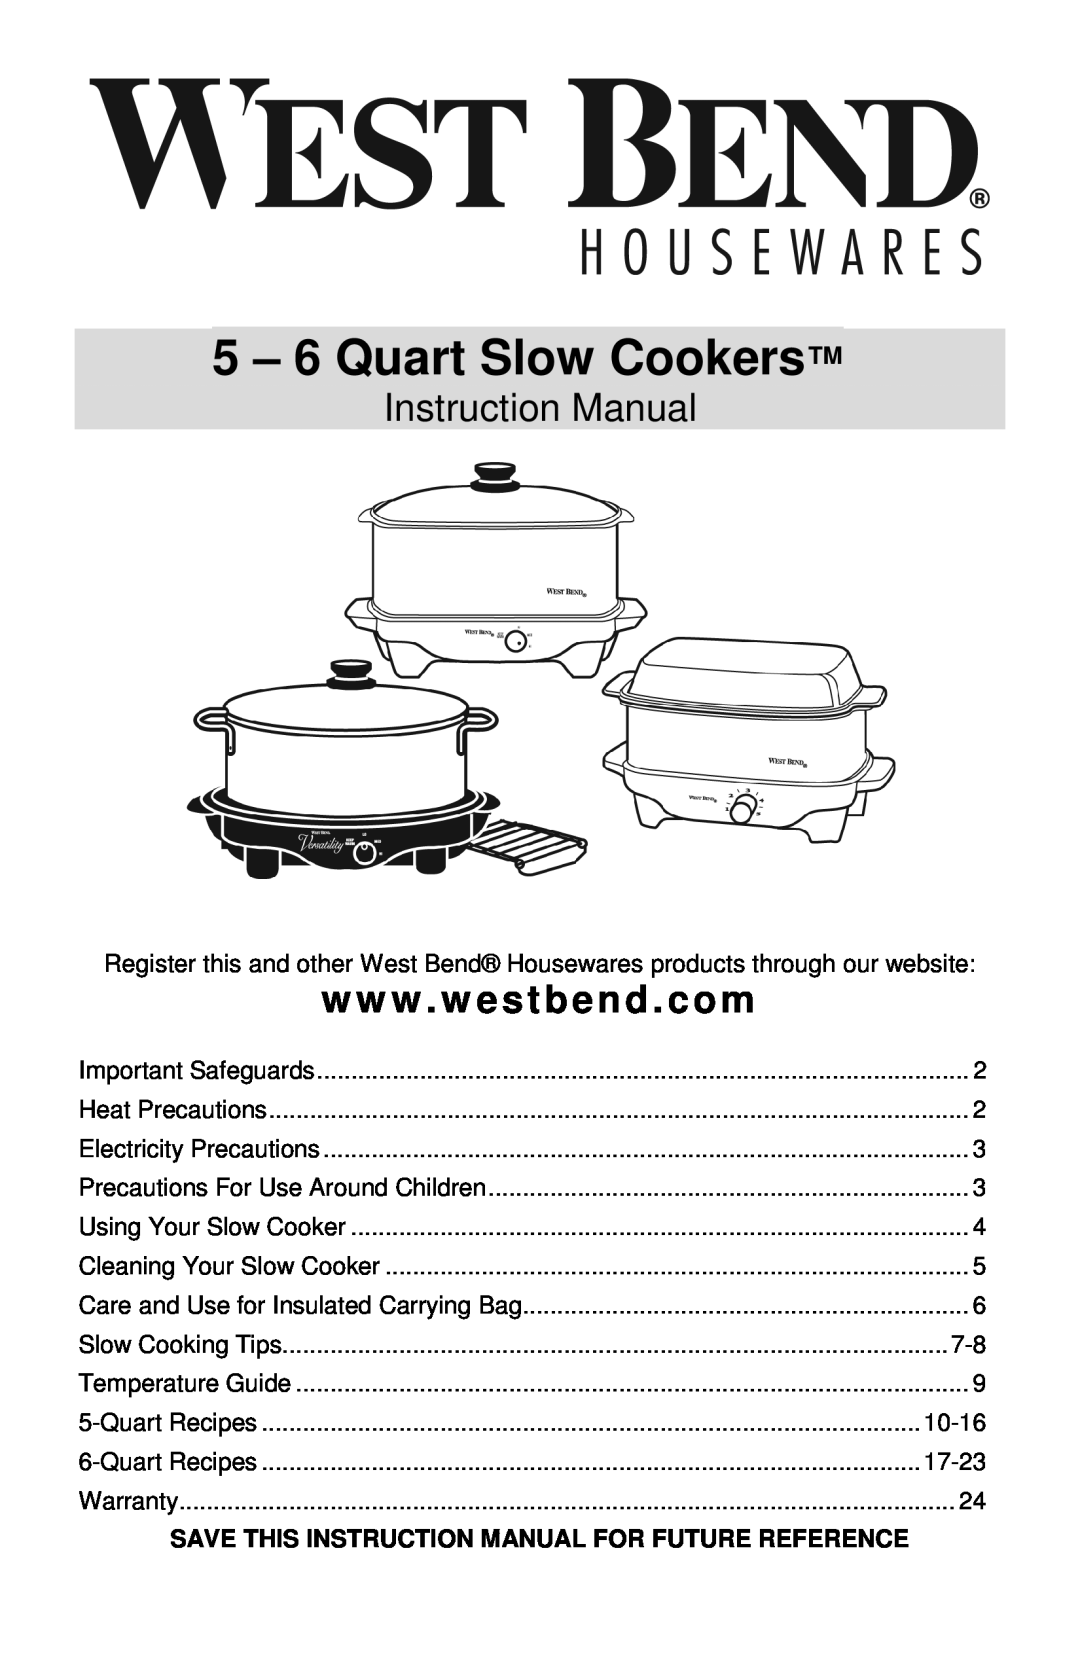 West Bend instruction manual 5 - 6 Quart Slow Cookers, w w w . w estbend . com 